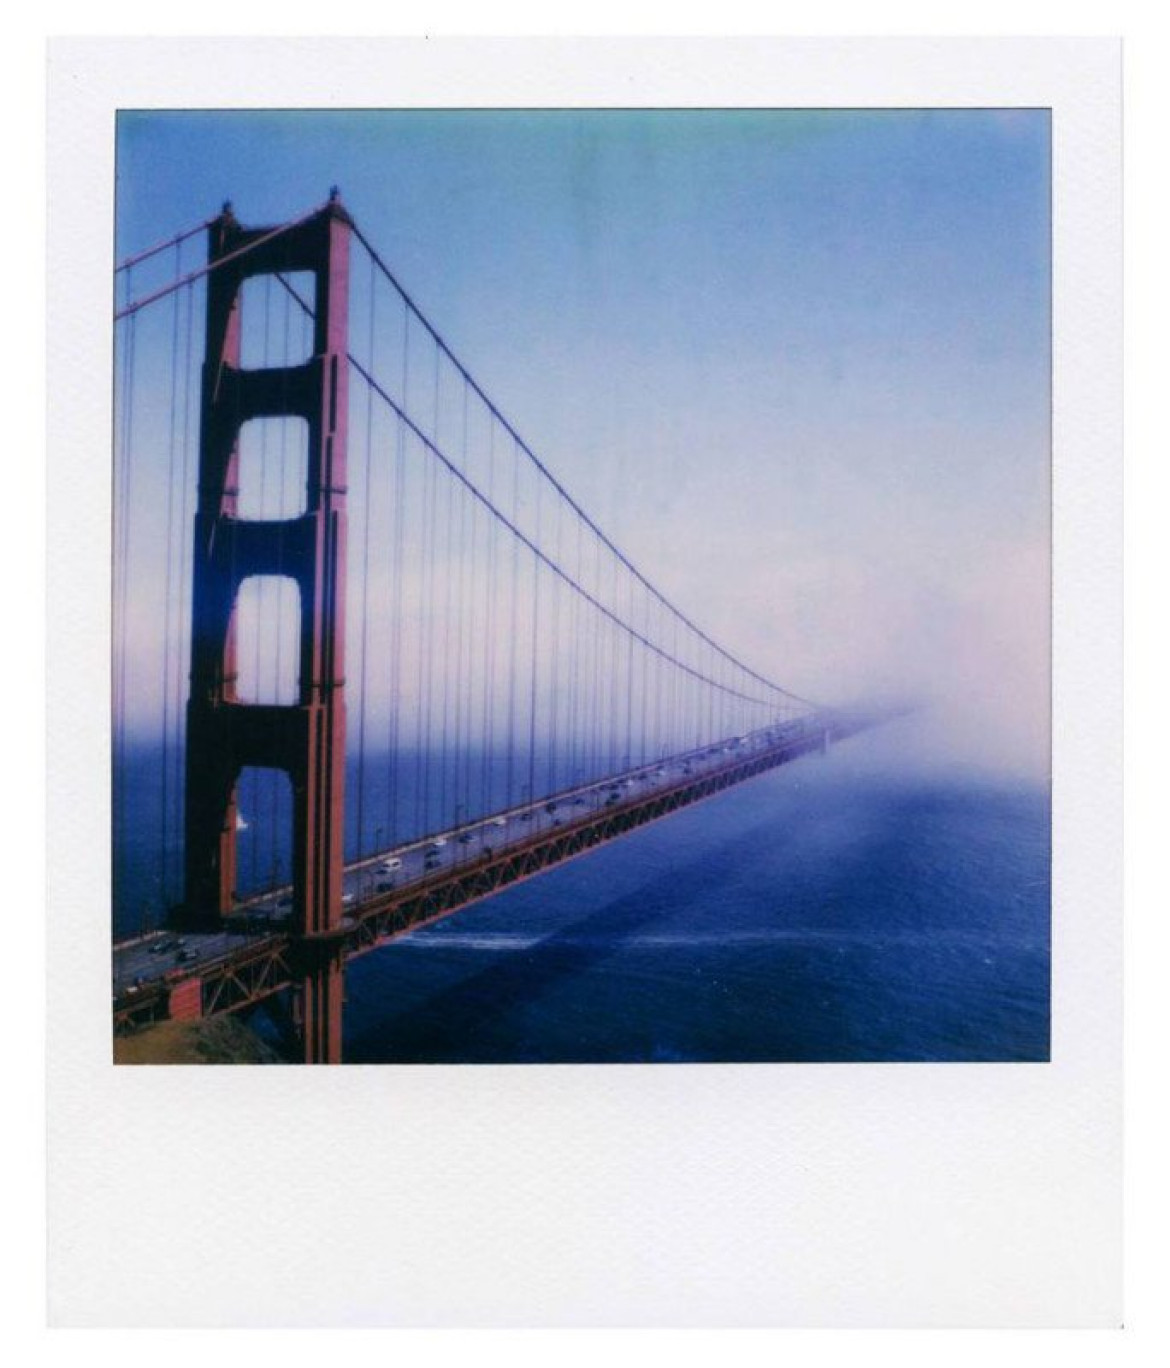 fot. Patrick Tobin | Polaroid OneStep 2, film i-Type